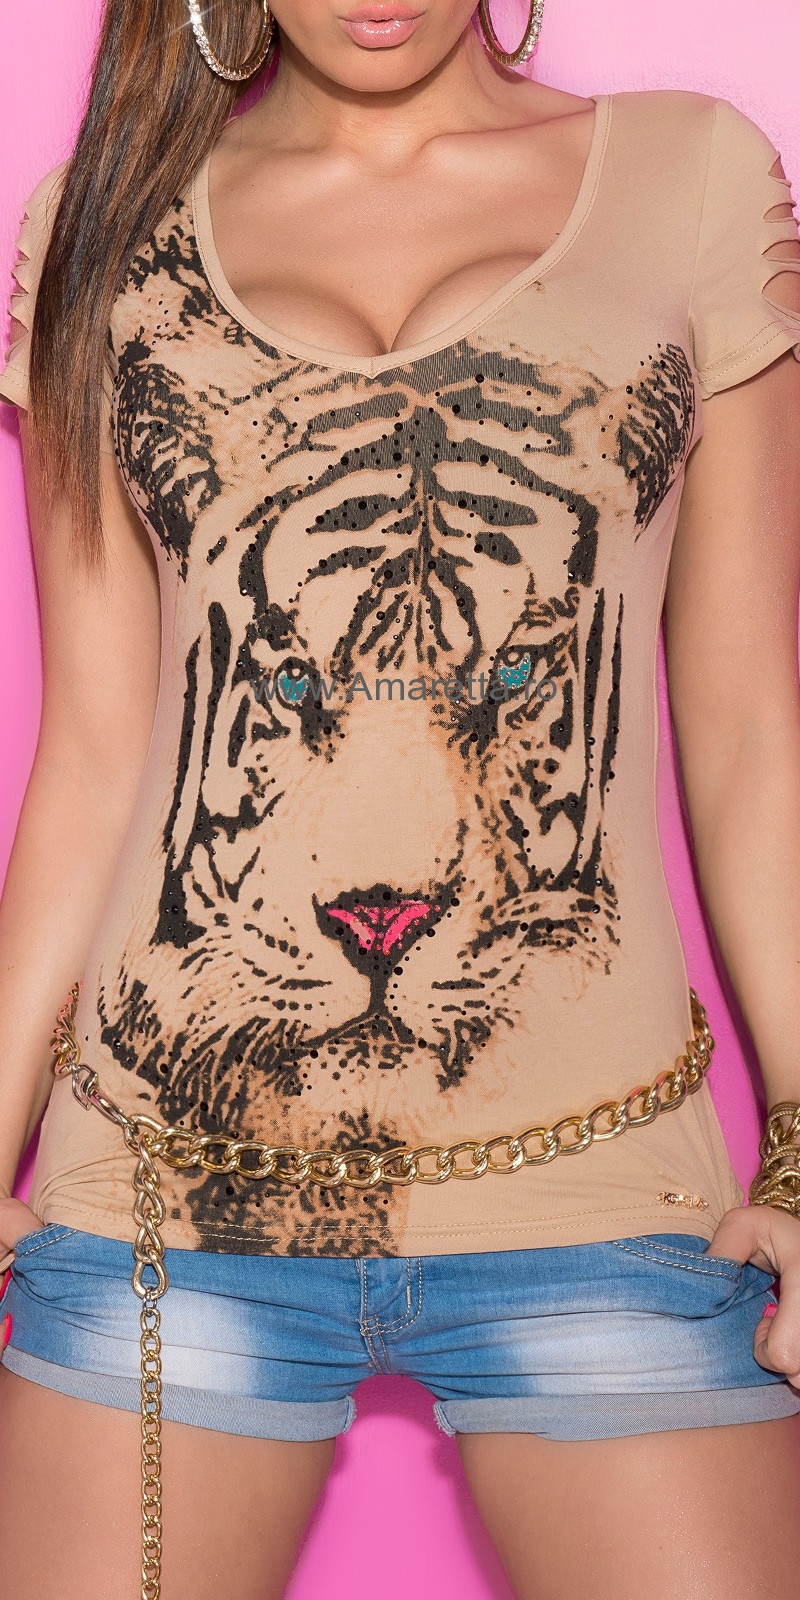 Tricouri dama sexy cu imprimeu tigru si decupaje